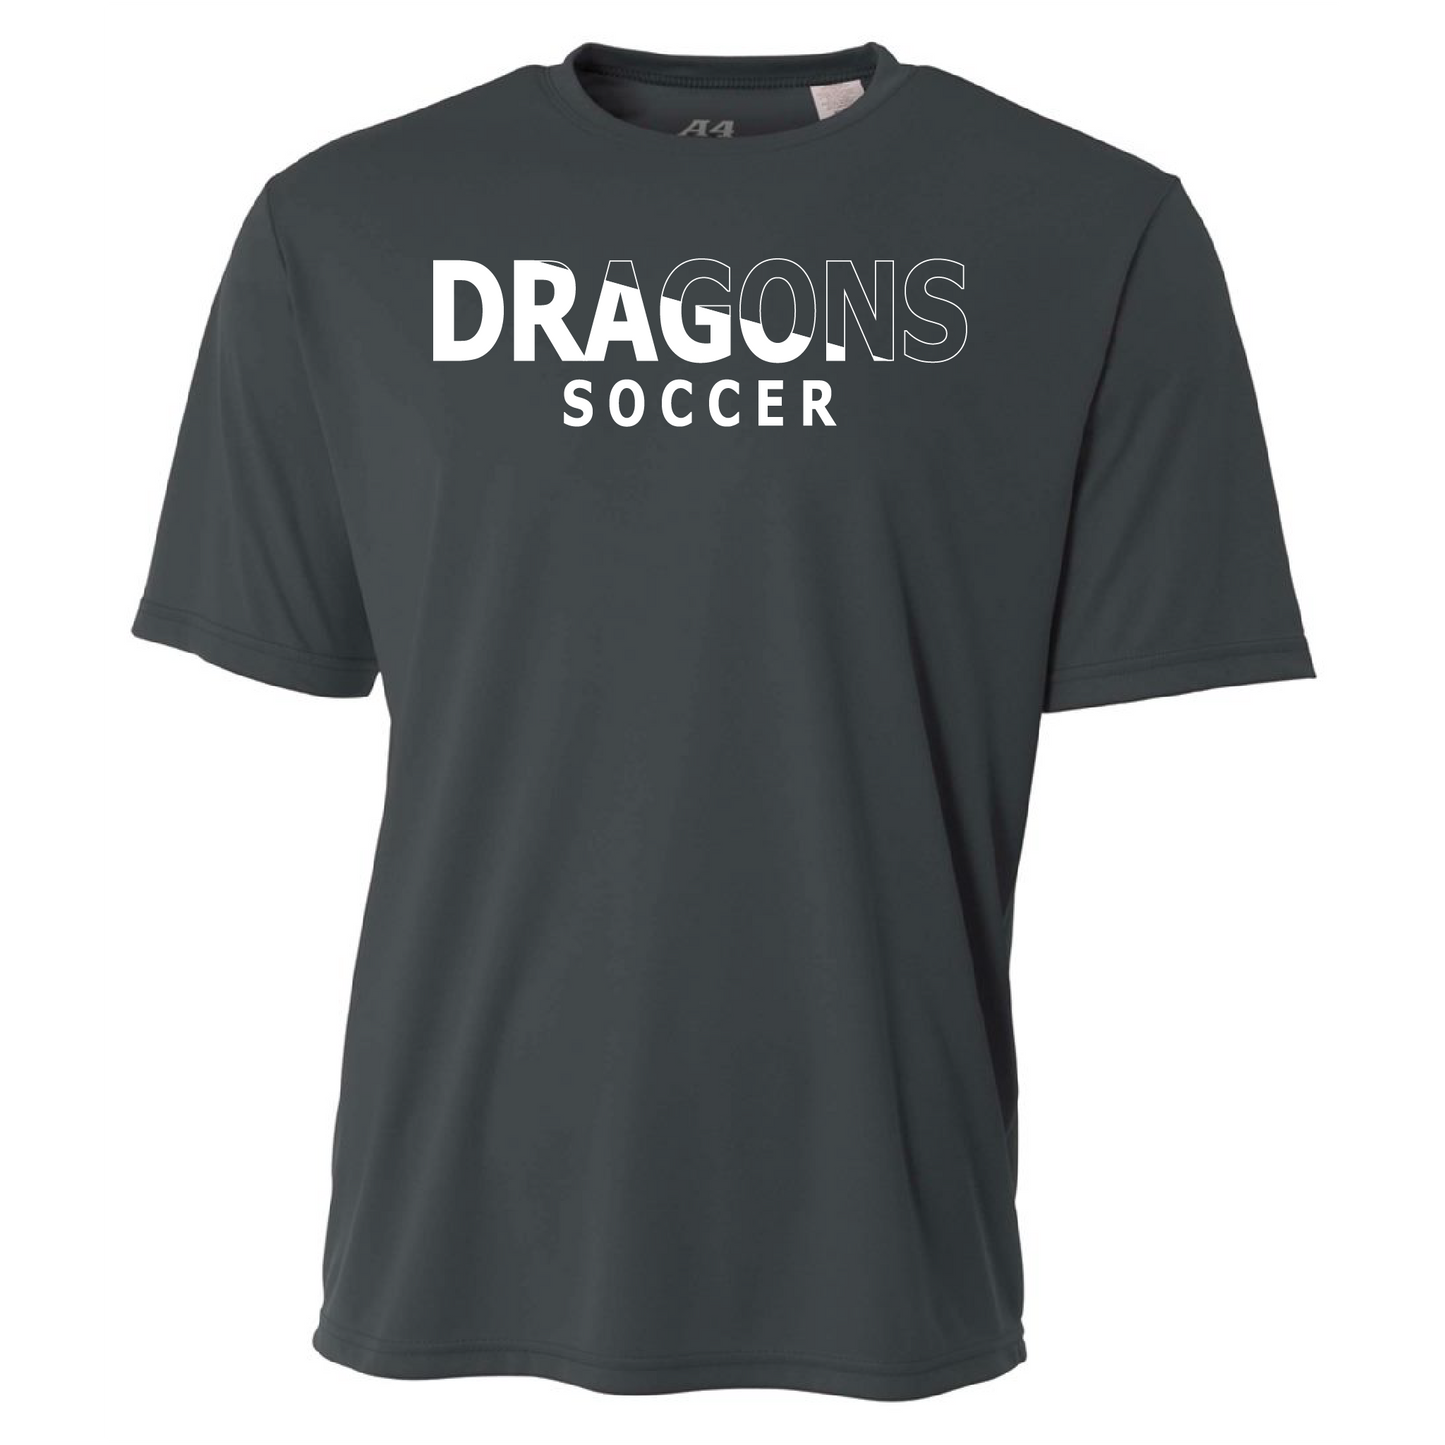 Mens S/S T-Shirt - Dragons Soccer Slashed White